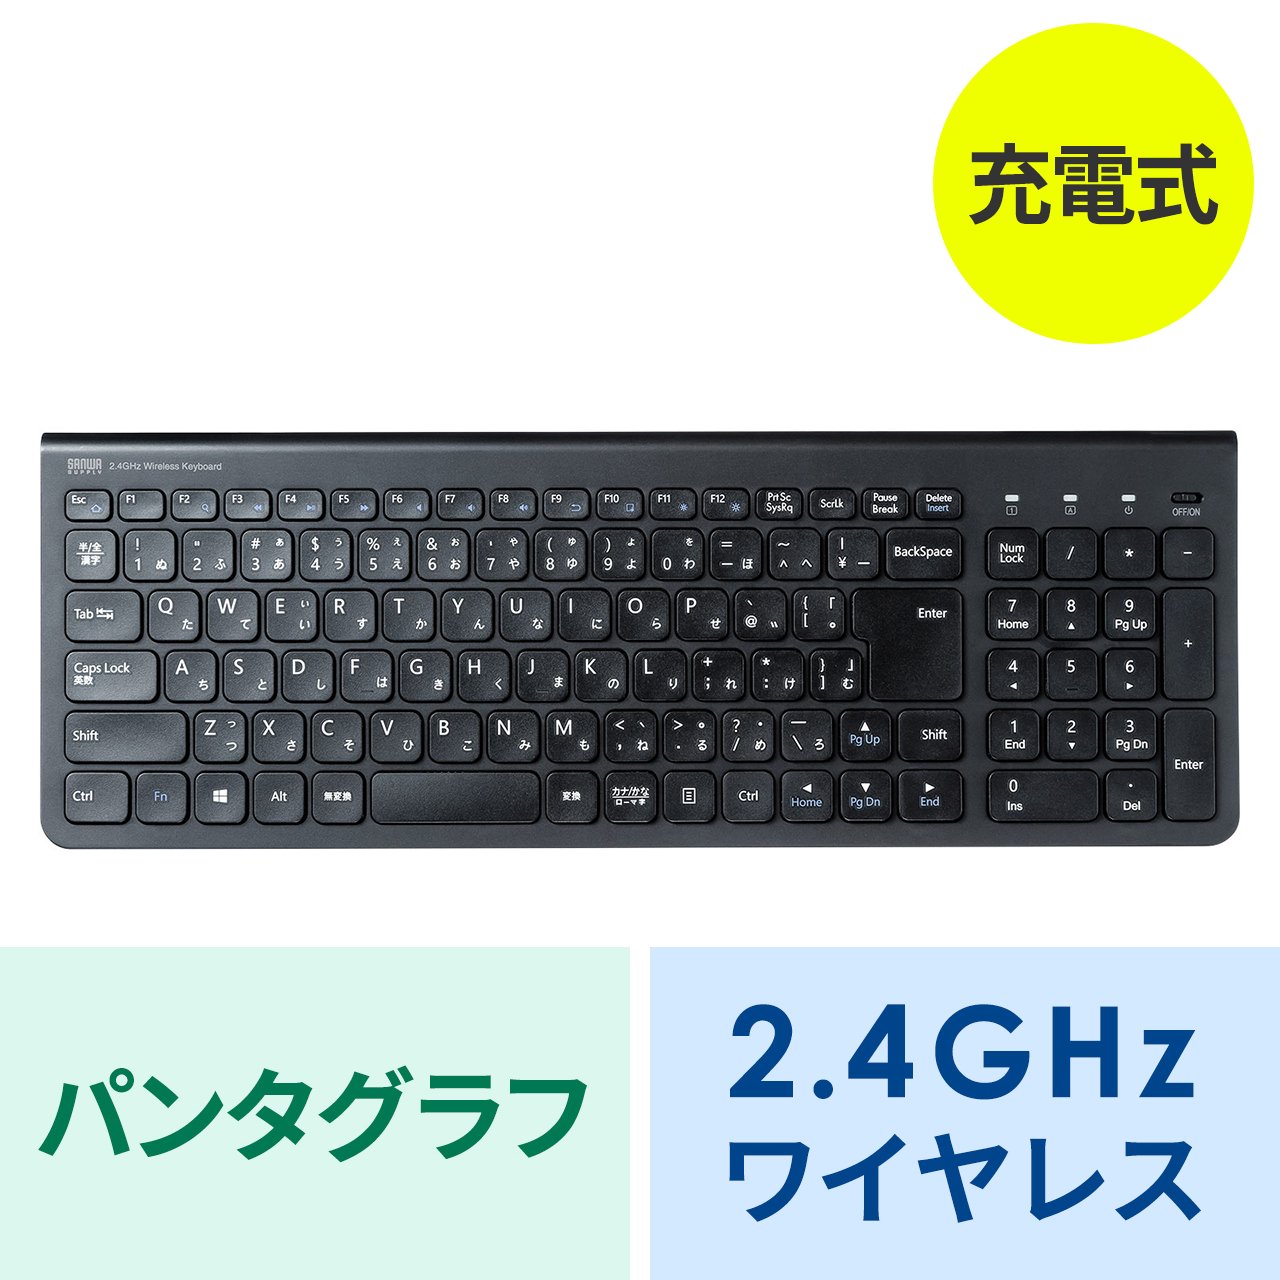 2.4GHz ワイヤレスキーボード テンキーあり パンタグラフ 充電式 日本語配列(JIS) ブラック SKB-WL31BK